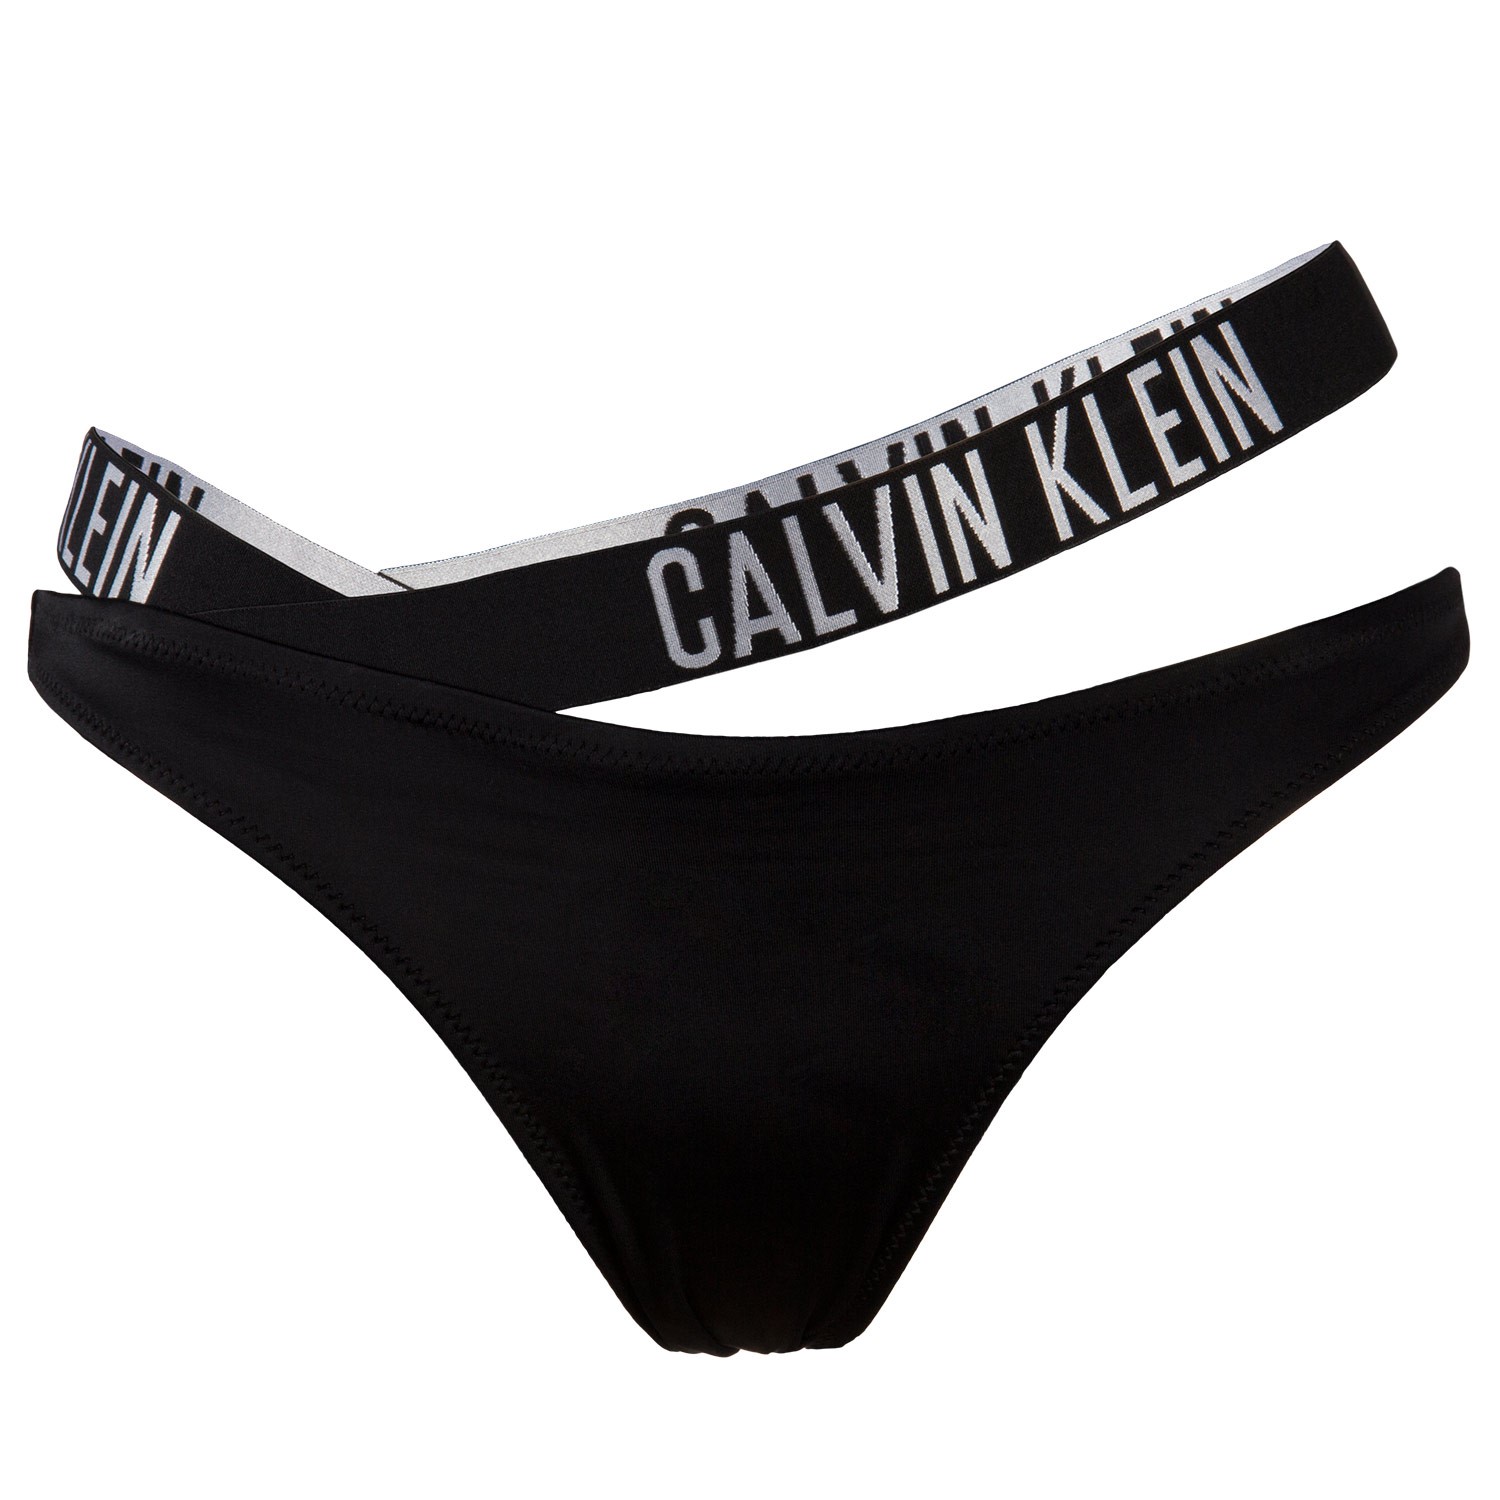 Calvin klein bikini hose intense power